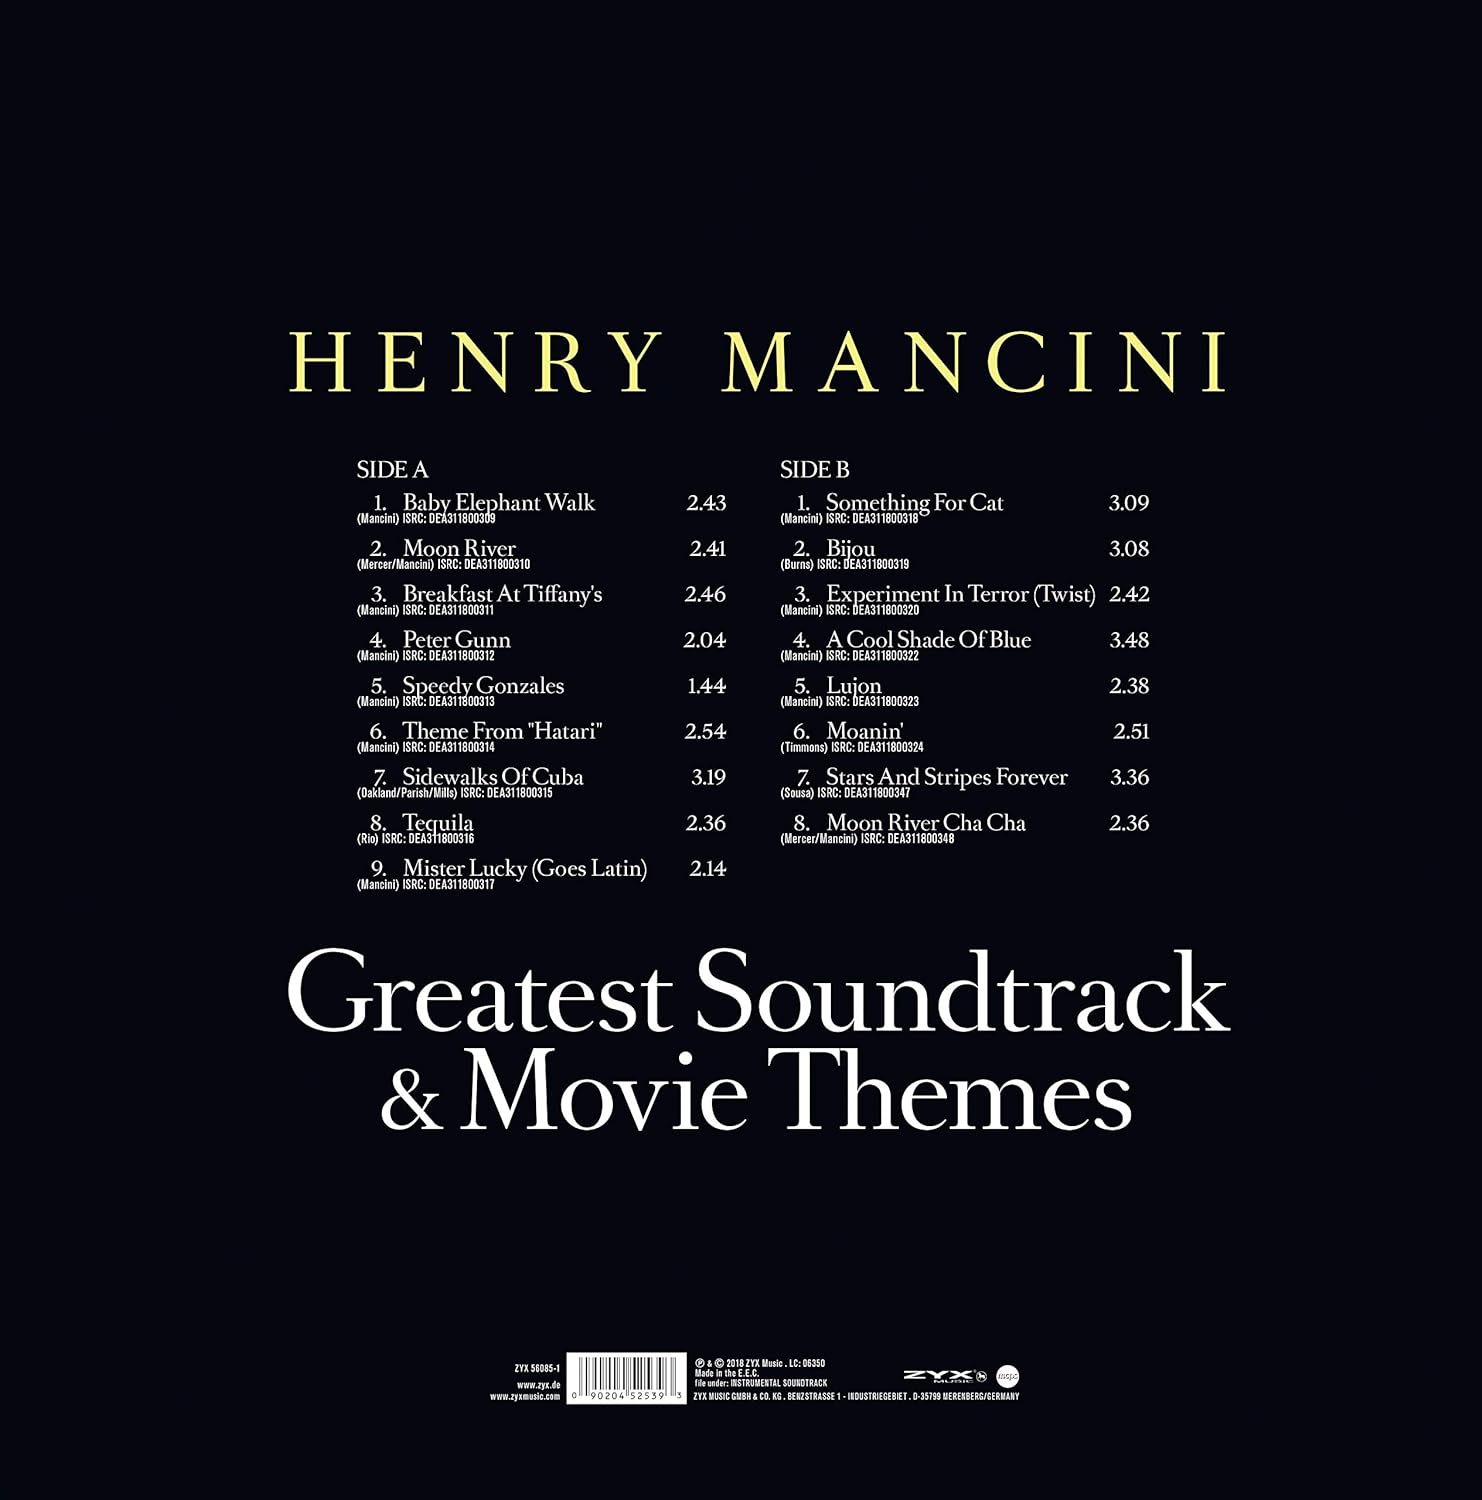 Henry Mancini Greatest Soundtrack & Movies Themes (Vinyl LP + CD)